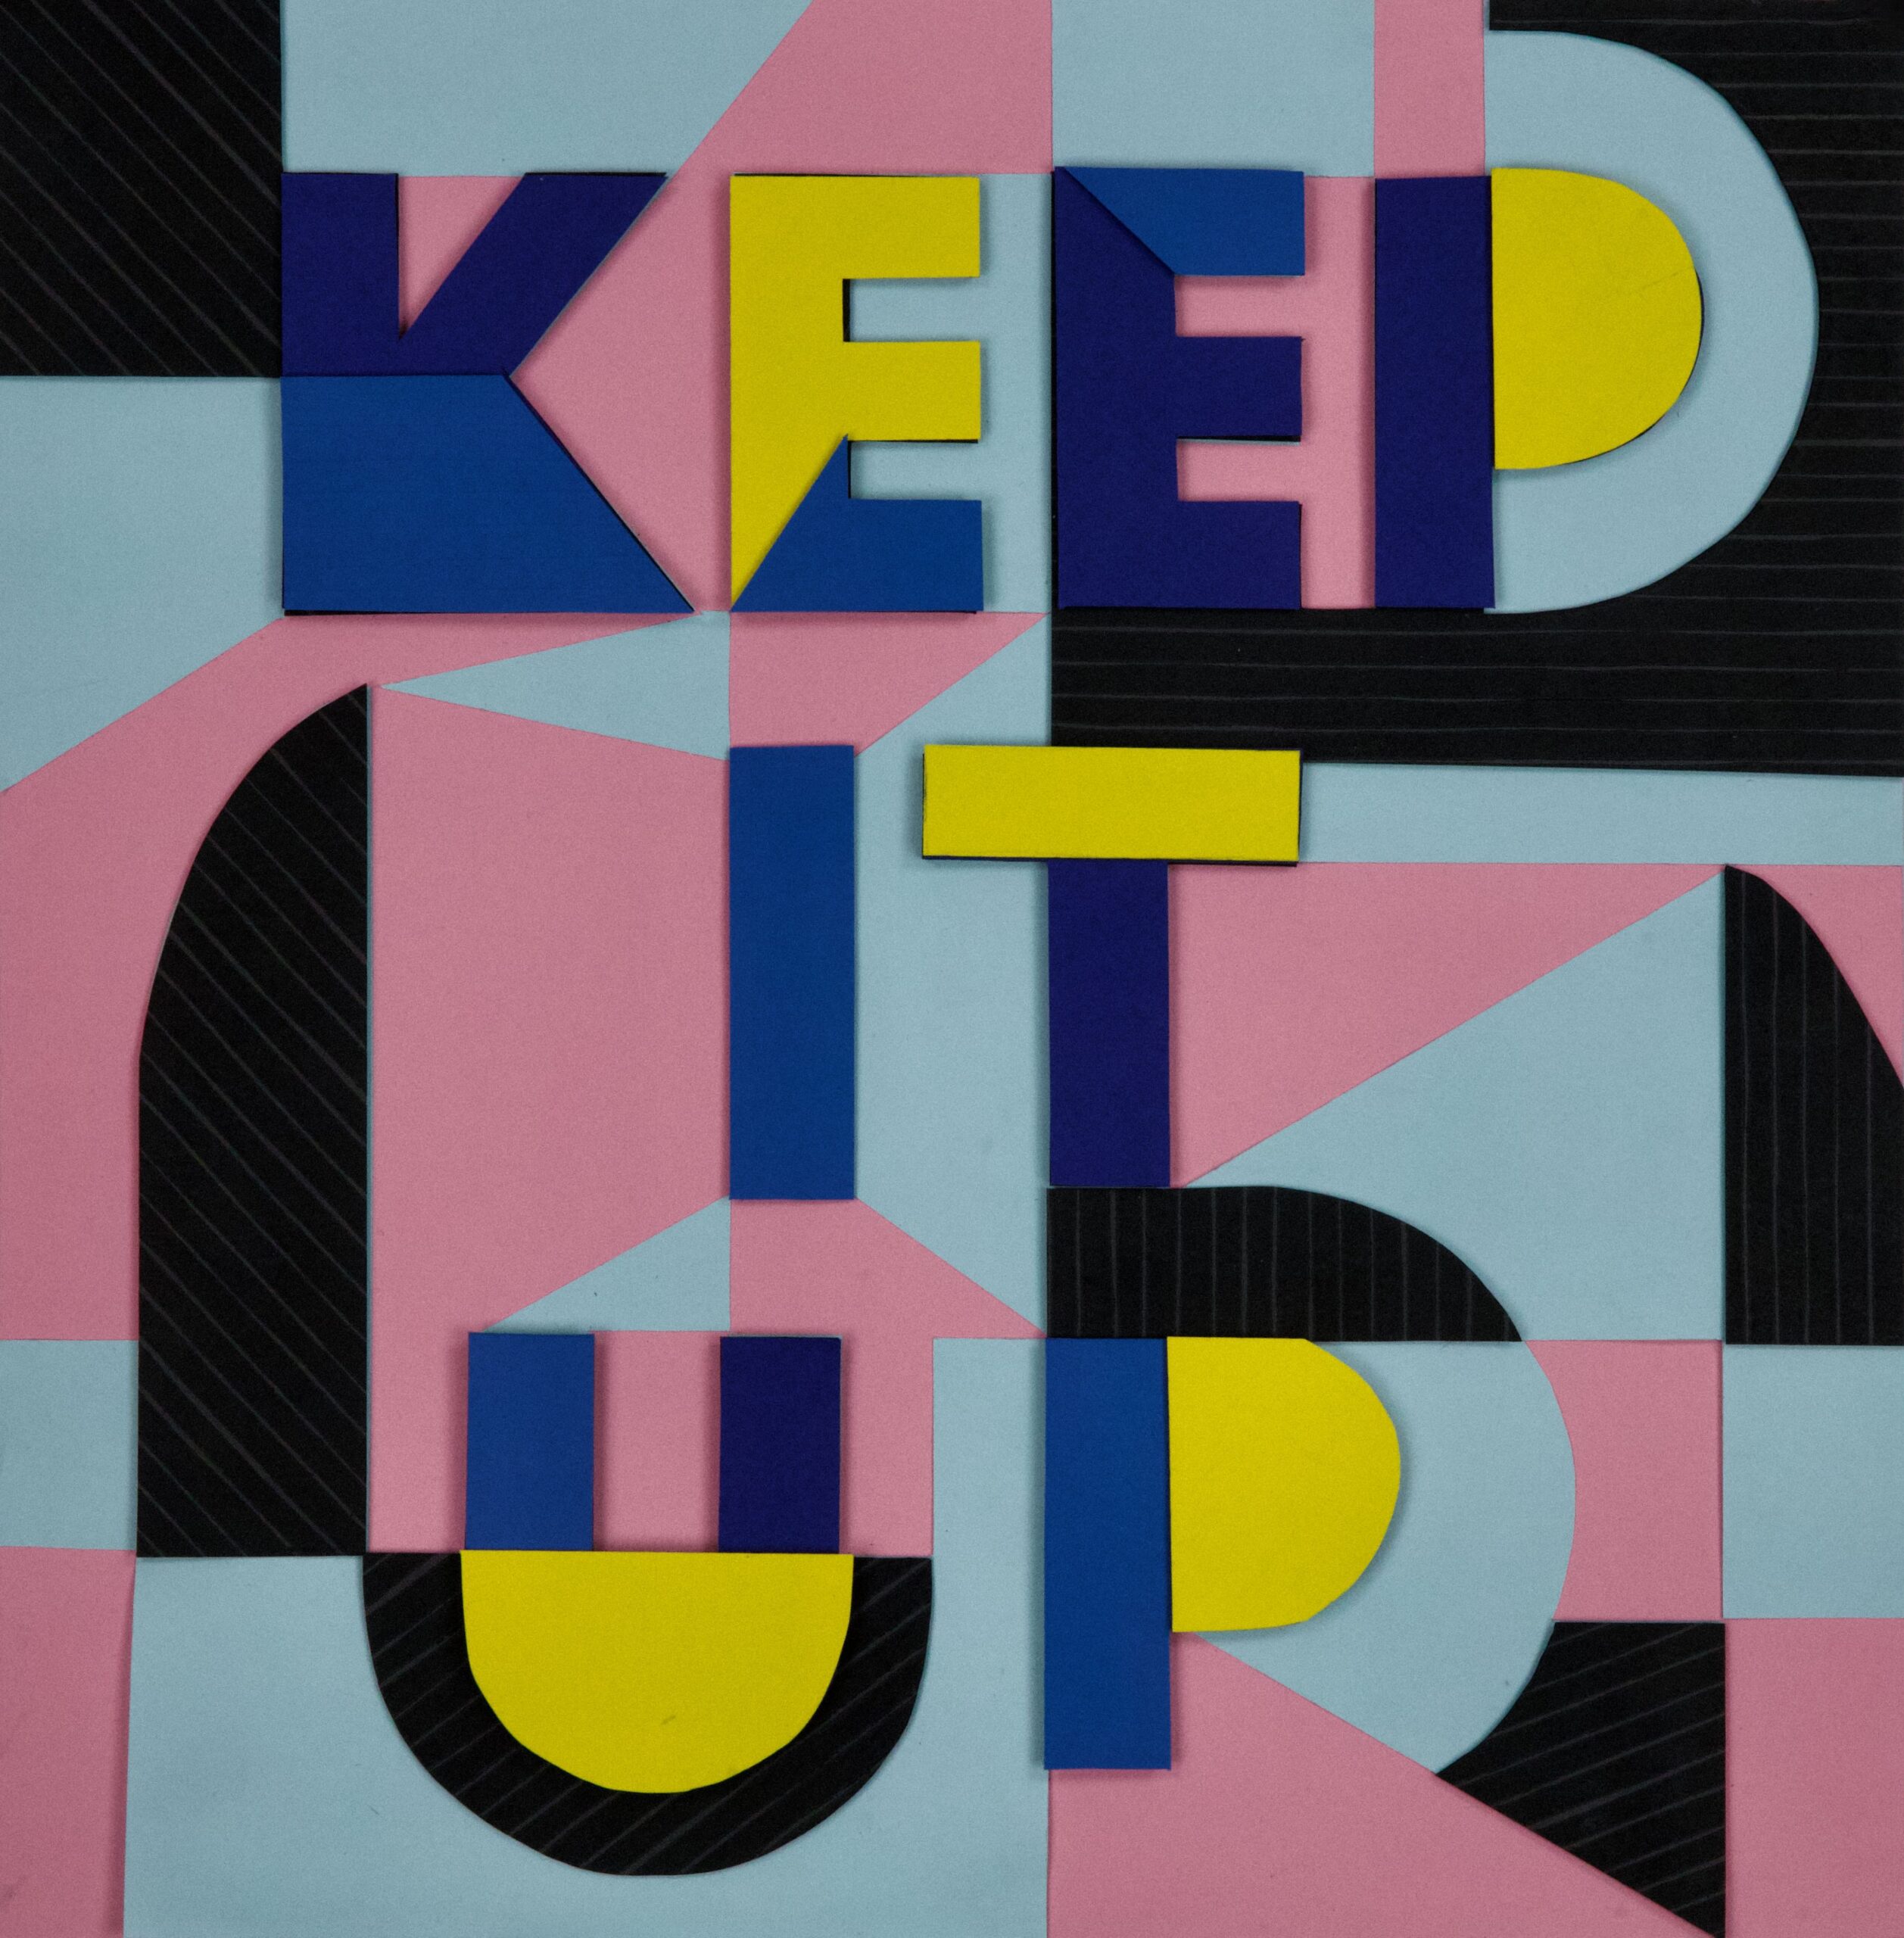 Obrázek díla Keep It Up od Petra Bláhová